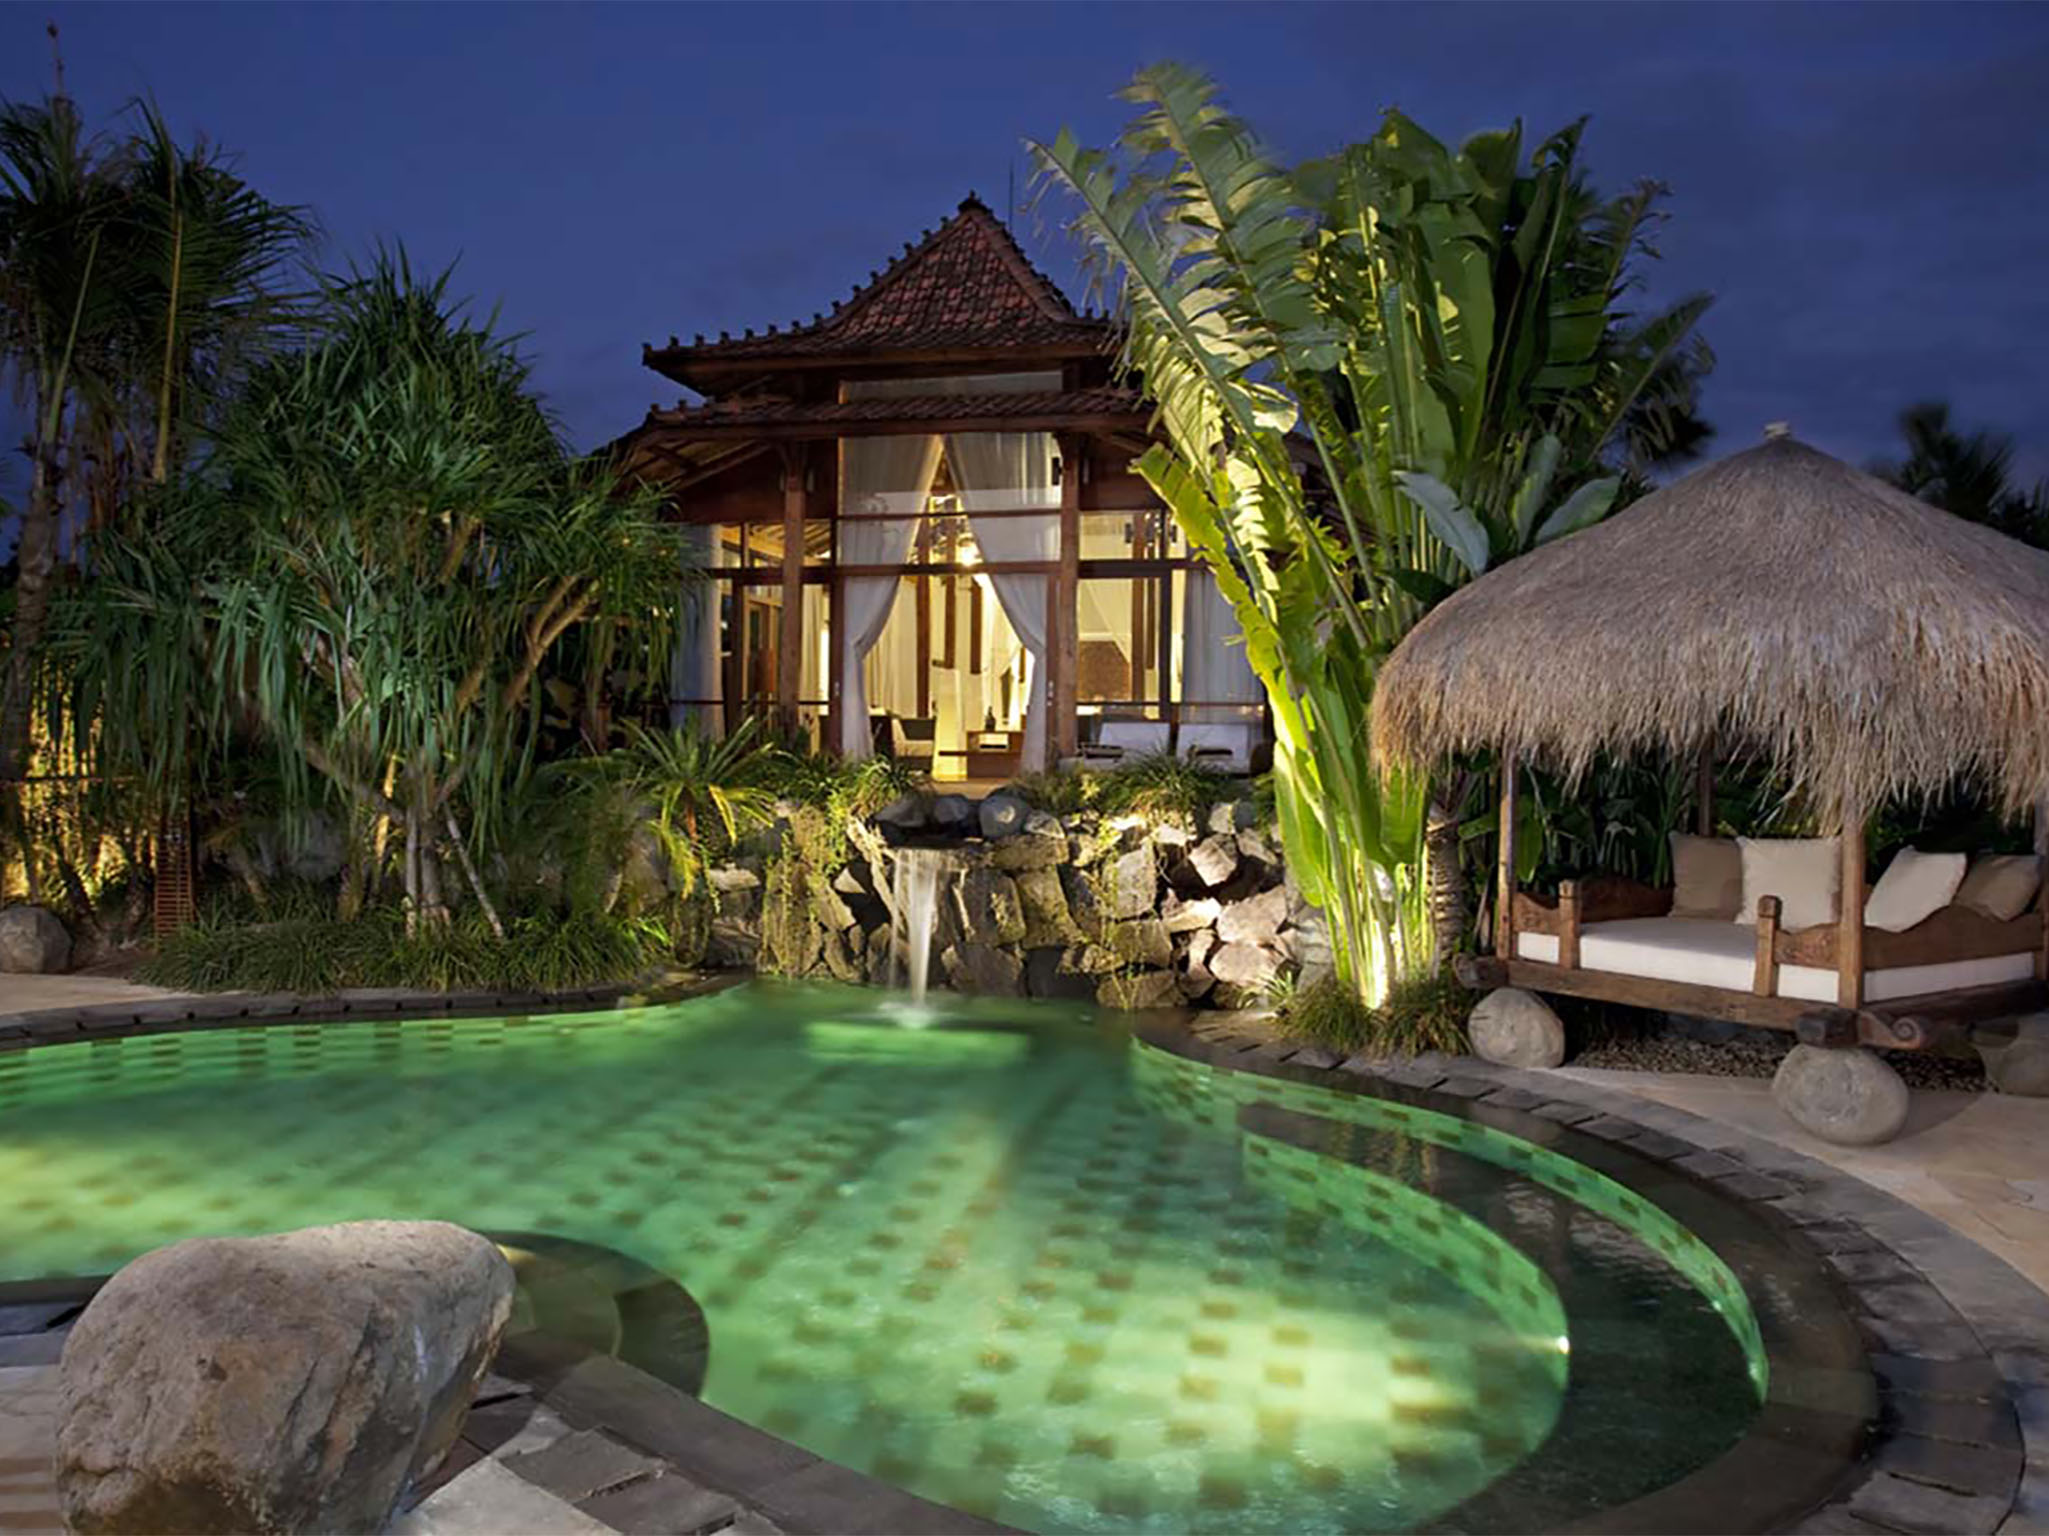 Villa Amy - The villa at night - Dea Villas - Villa Amy, Canggu, Bali